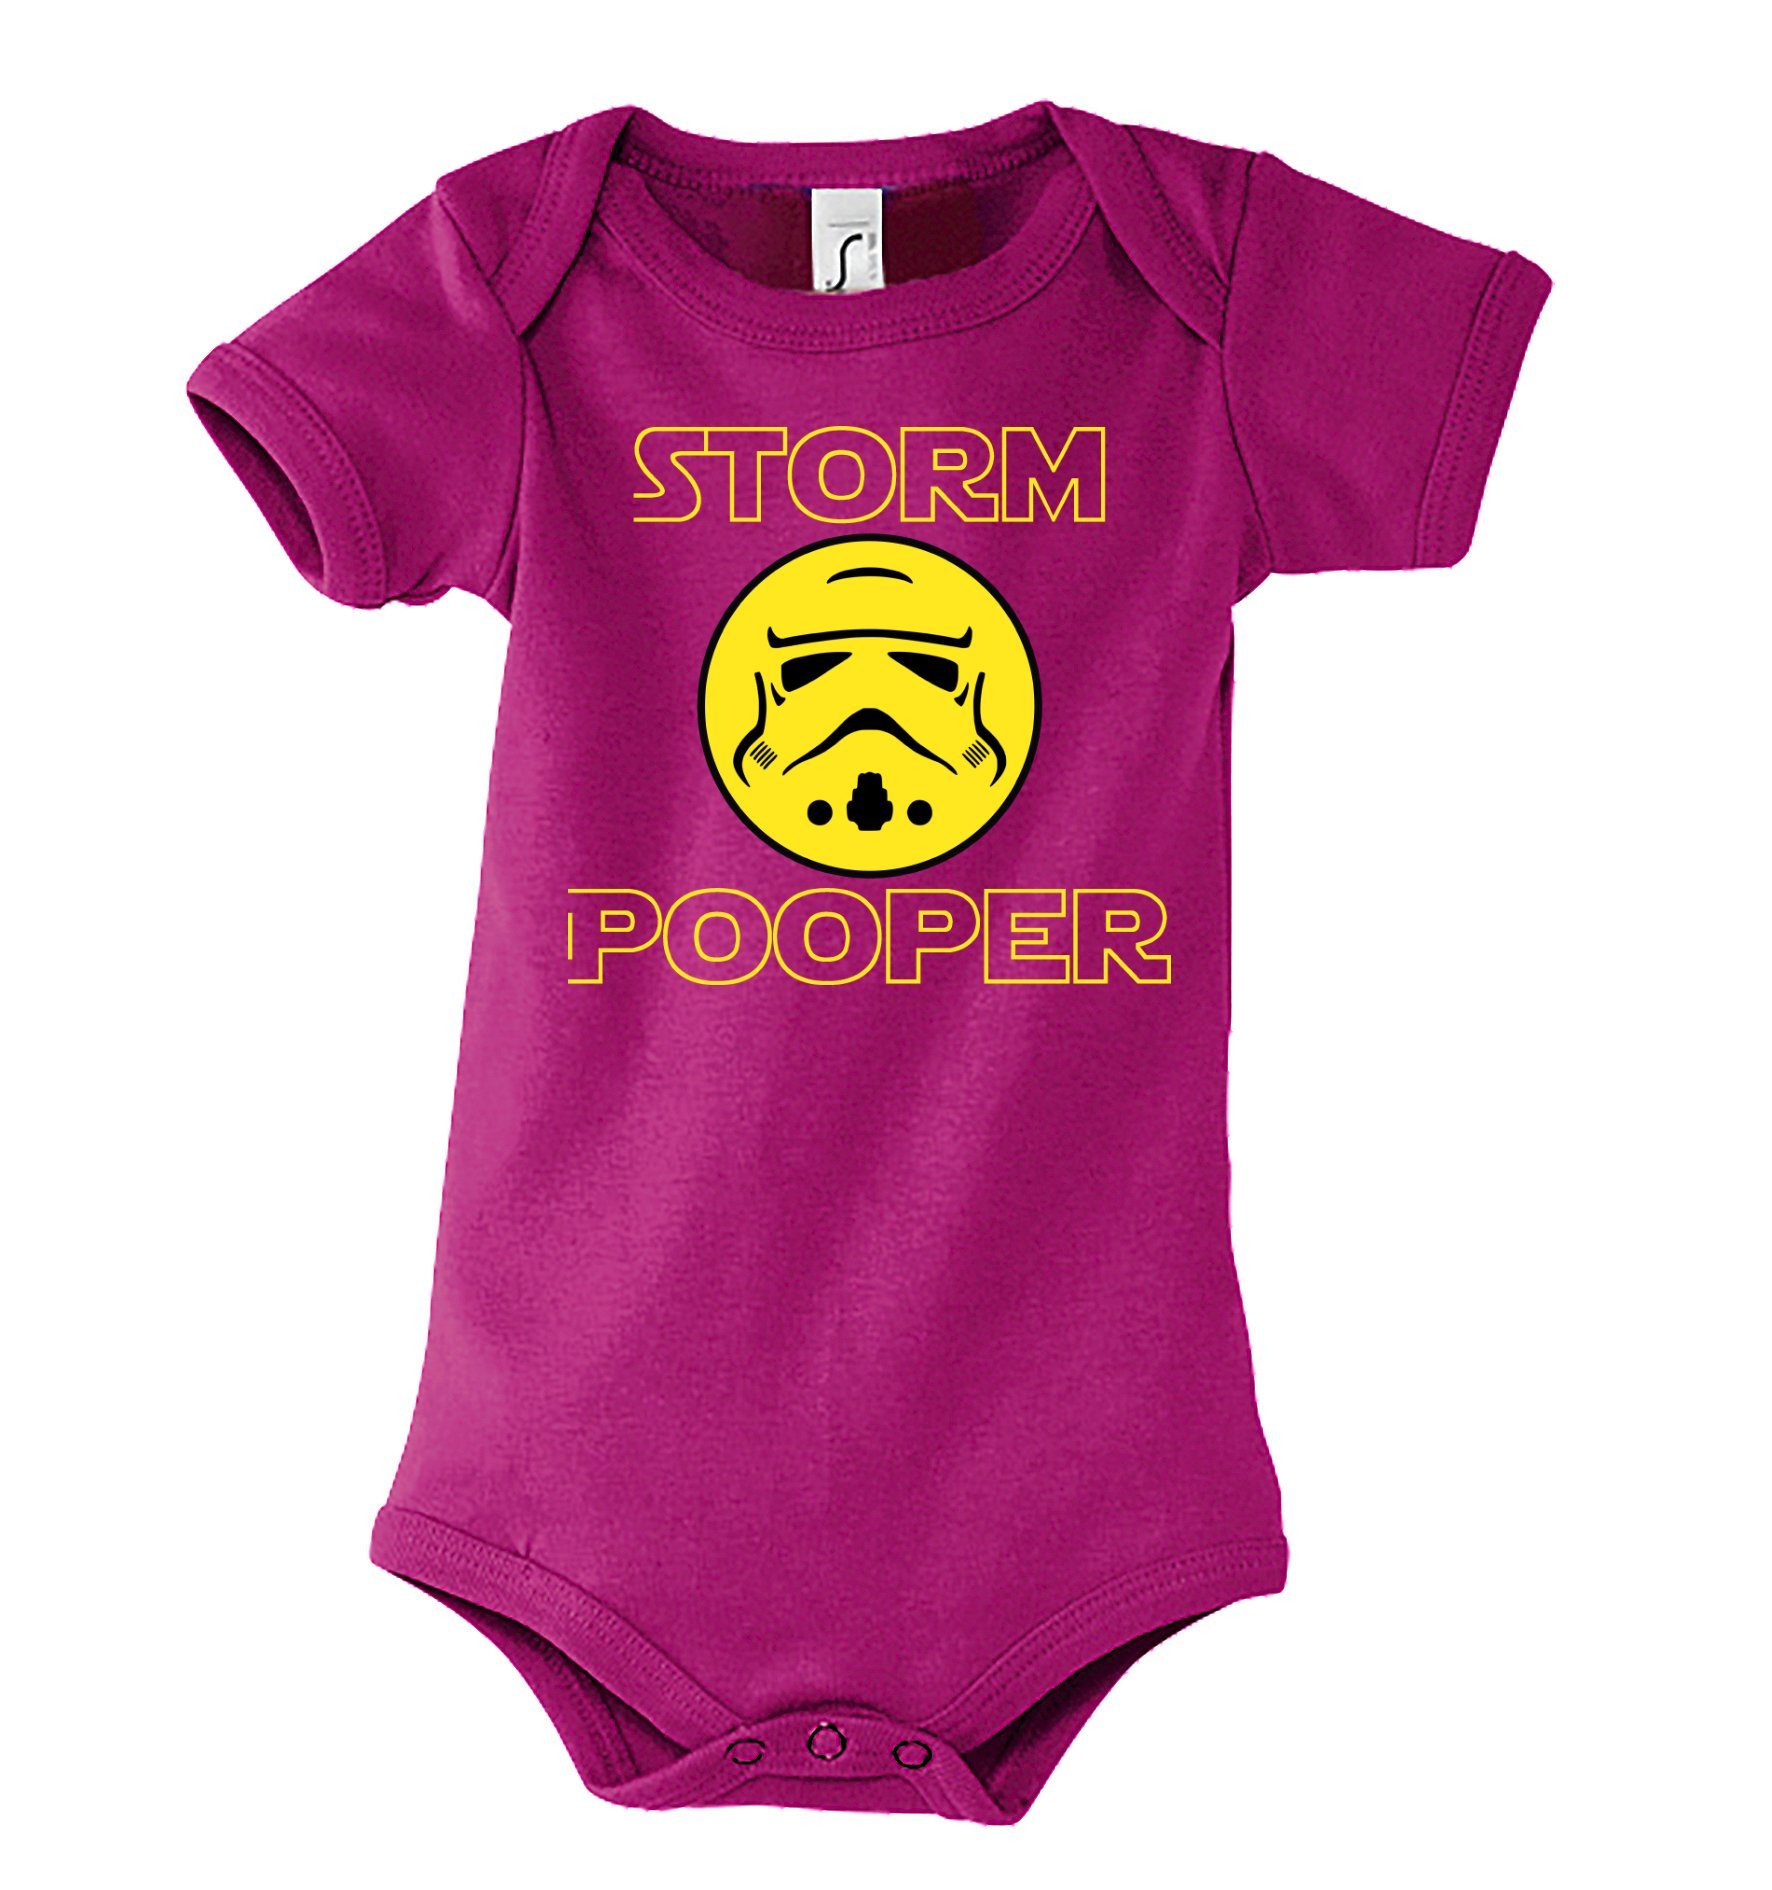 Youth Designz Kurzarmbody Storm Pooper Trooper Baby Body Kurzarm Strampler mit lustigem Spruch & Logo Print Fuchsia | Shirtbodies